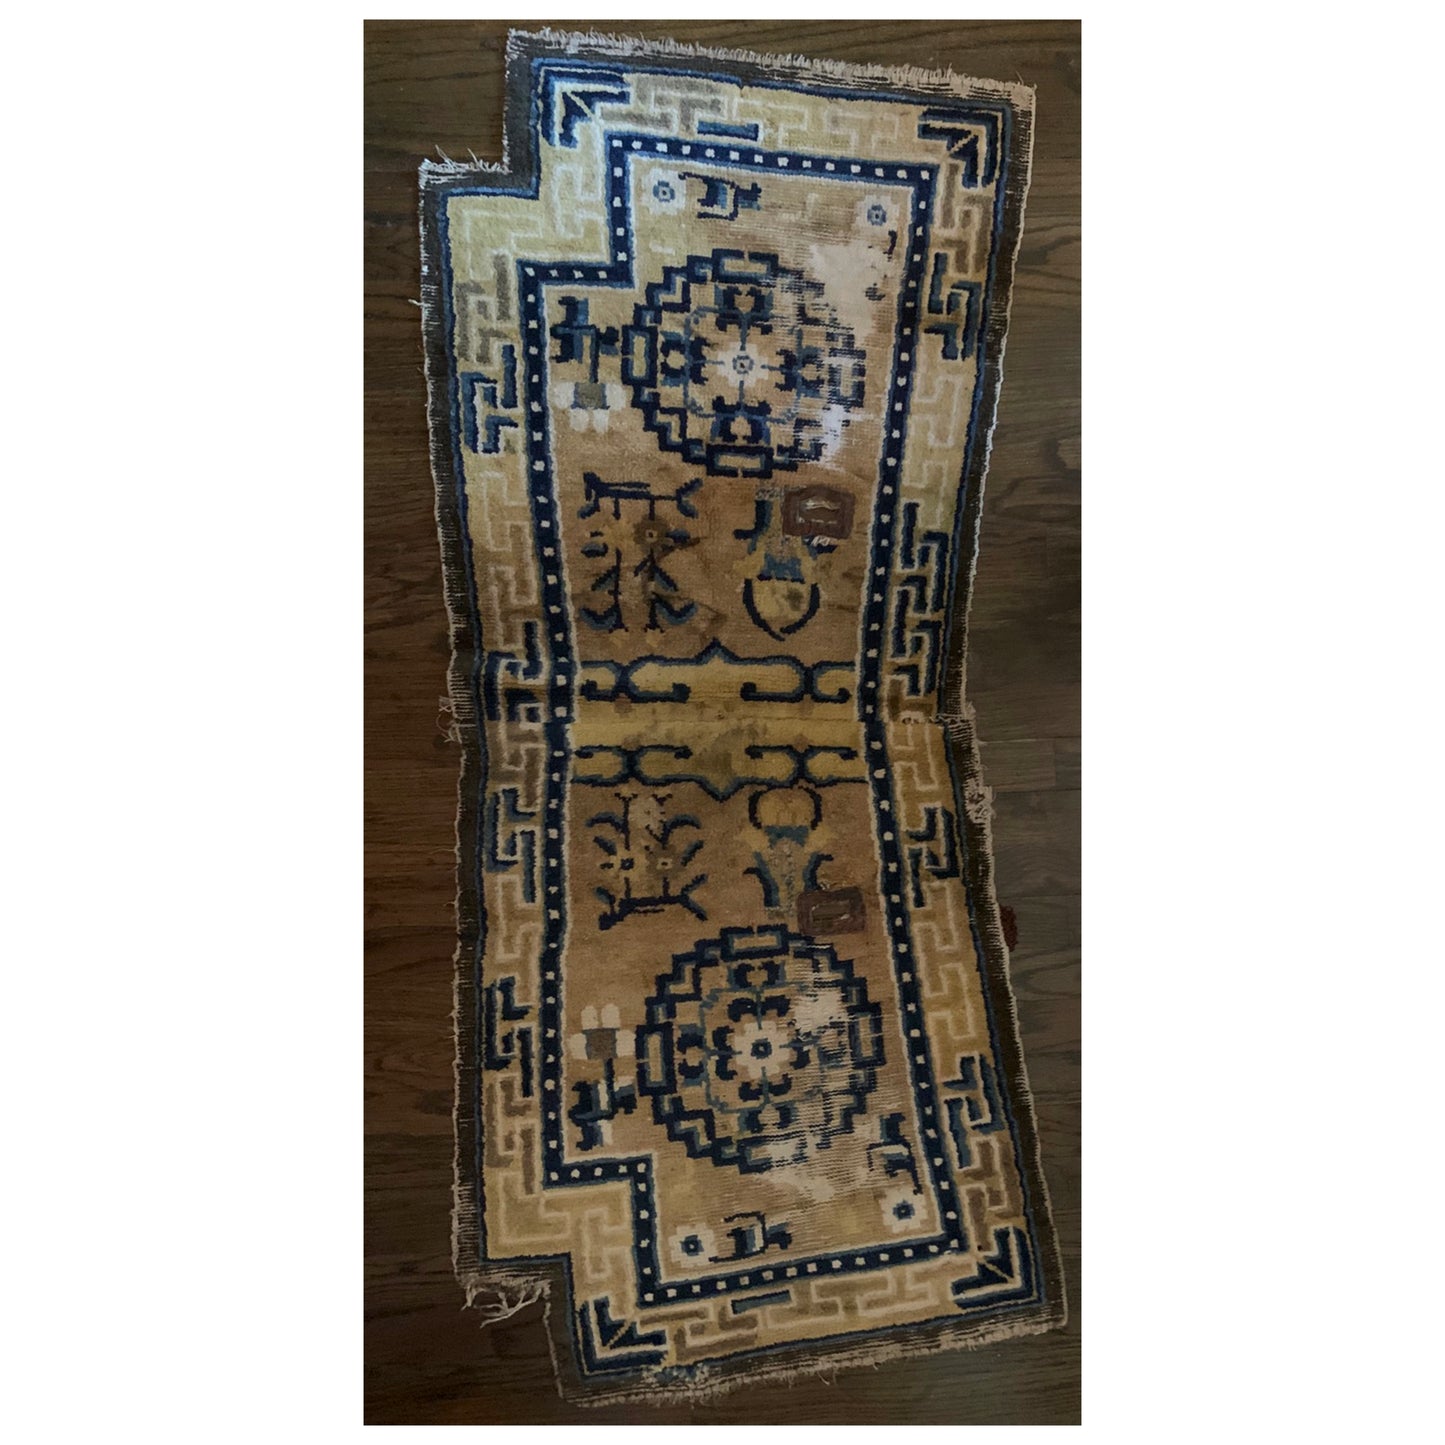 Antique Tibetan saddle rug